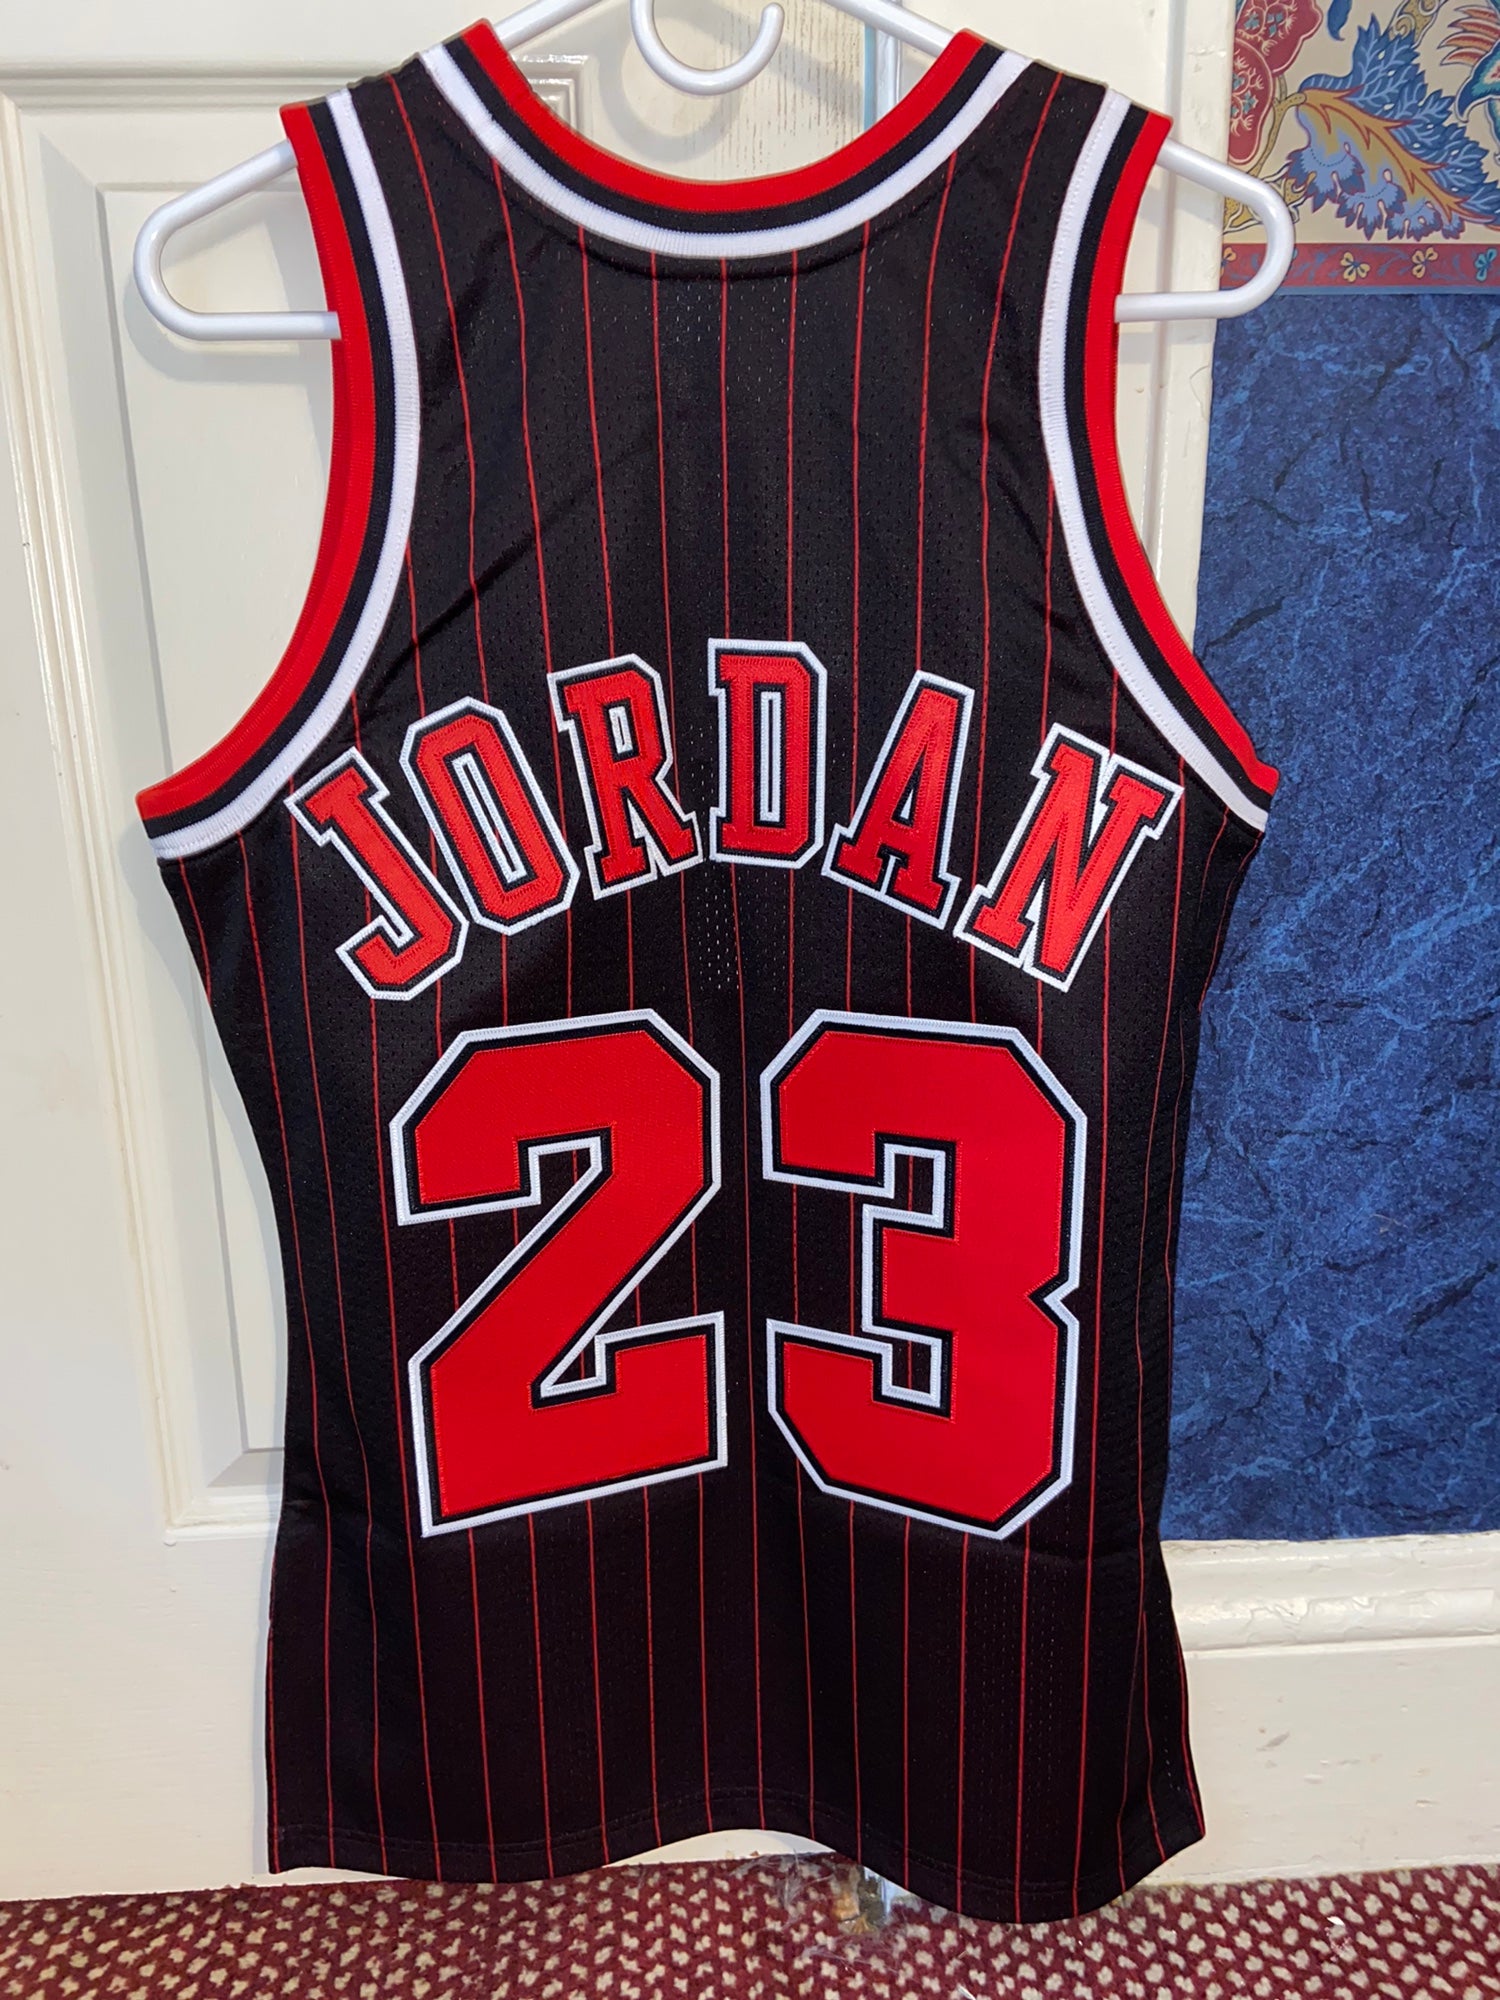 Preschool Mitchell & Ness Michael Jordan Black Chicago Bulls 1996/97 Hardwood Classics Authentic Jersey